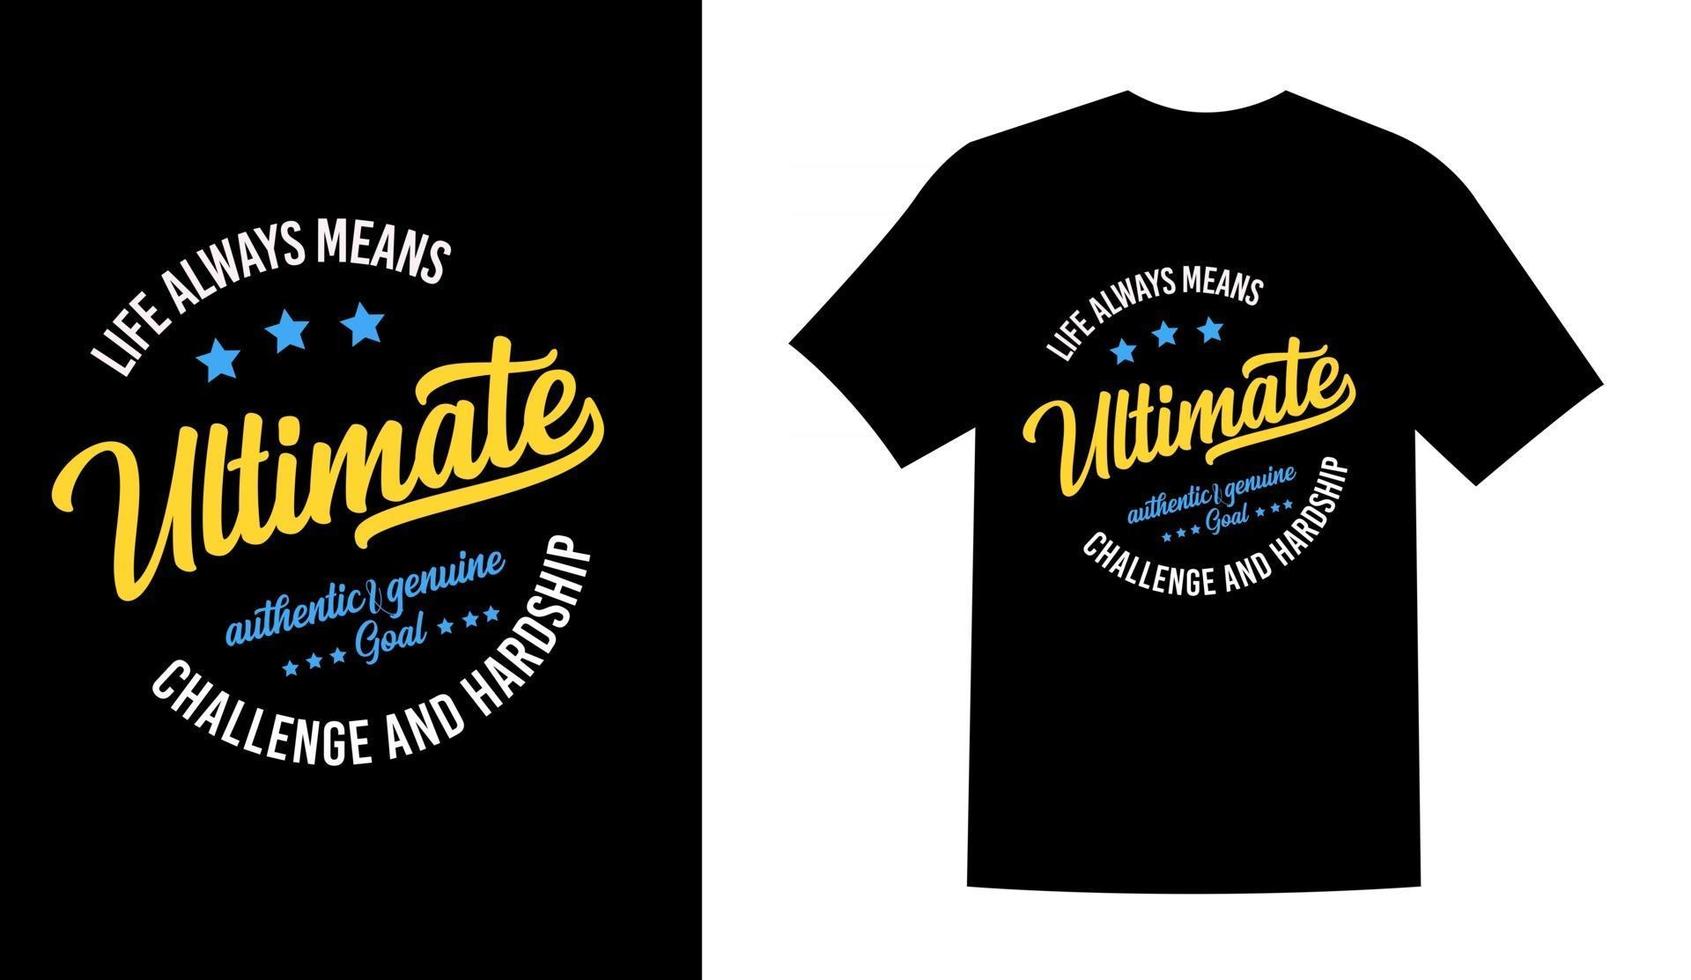 Life means ultimate challenge prinatble t shirt design vector